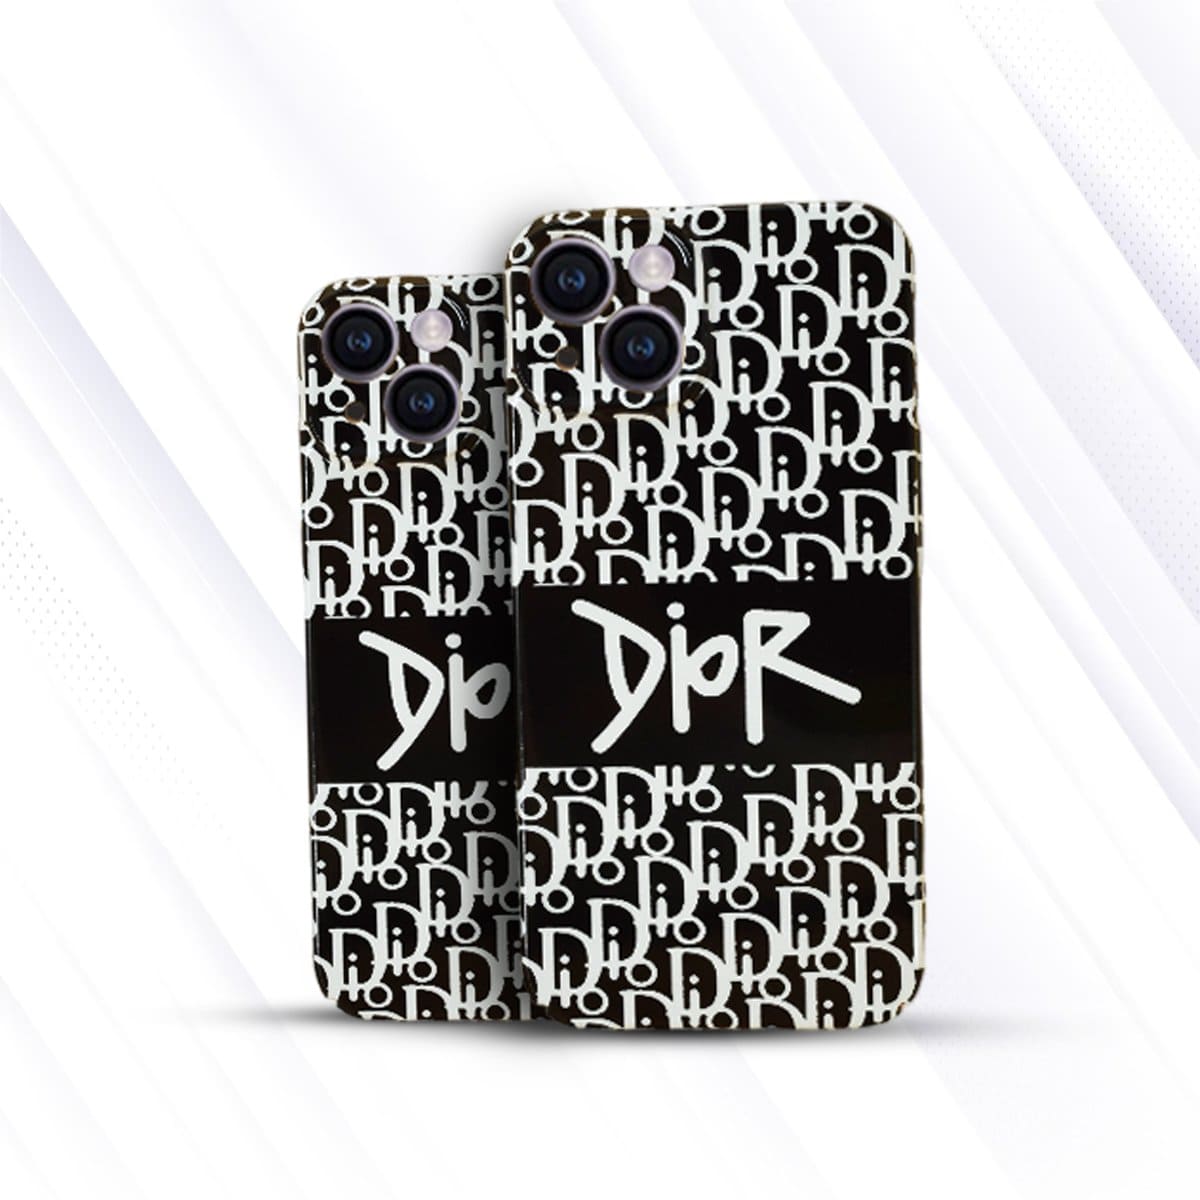 iPhone Dior Printed Case